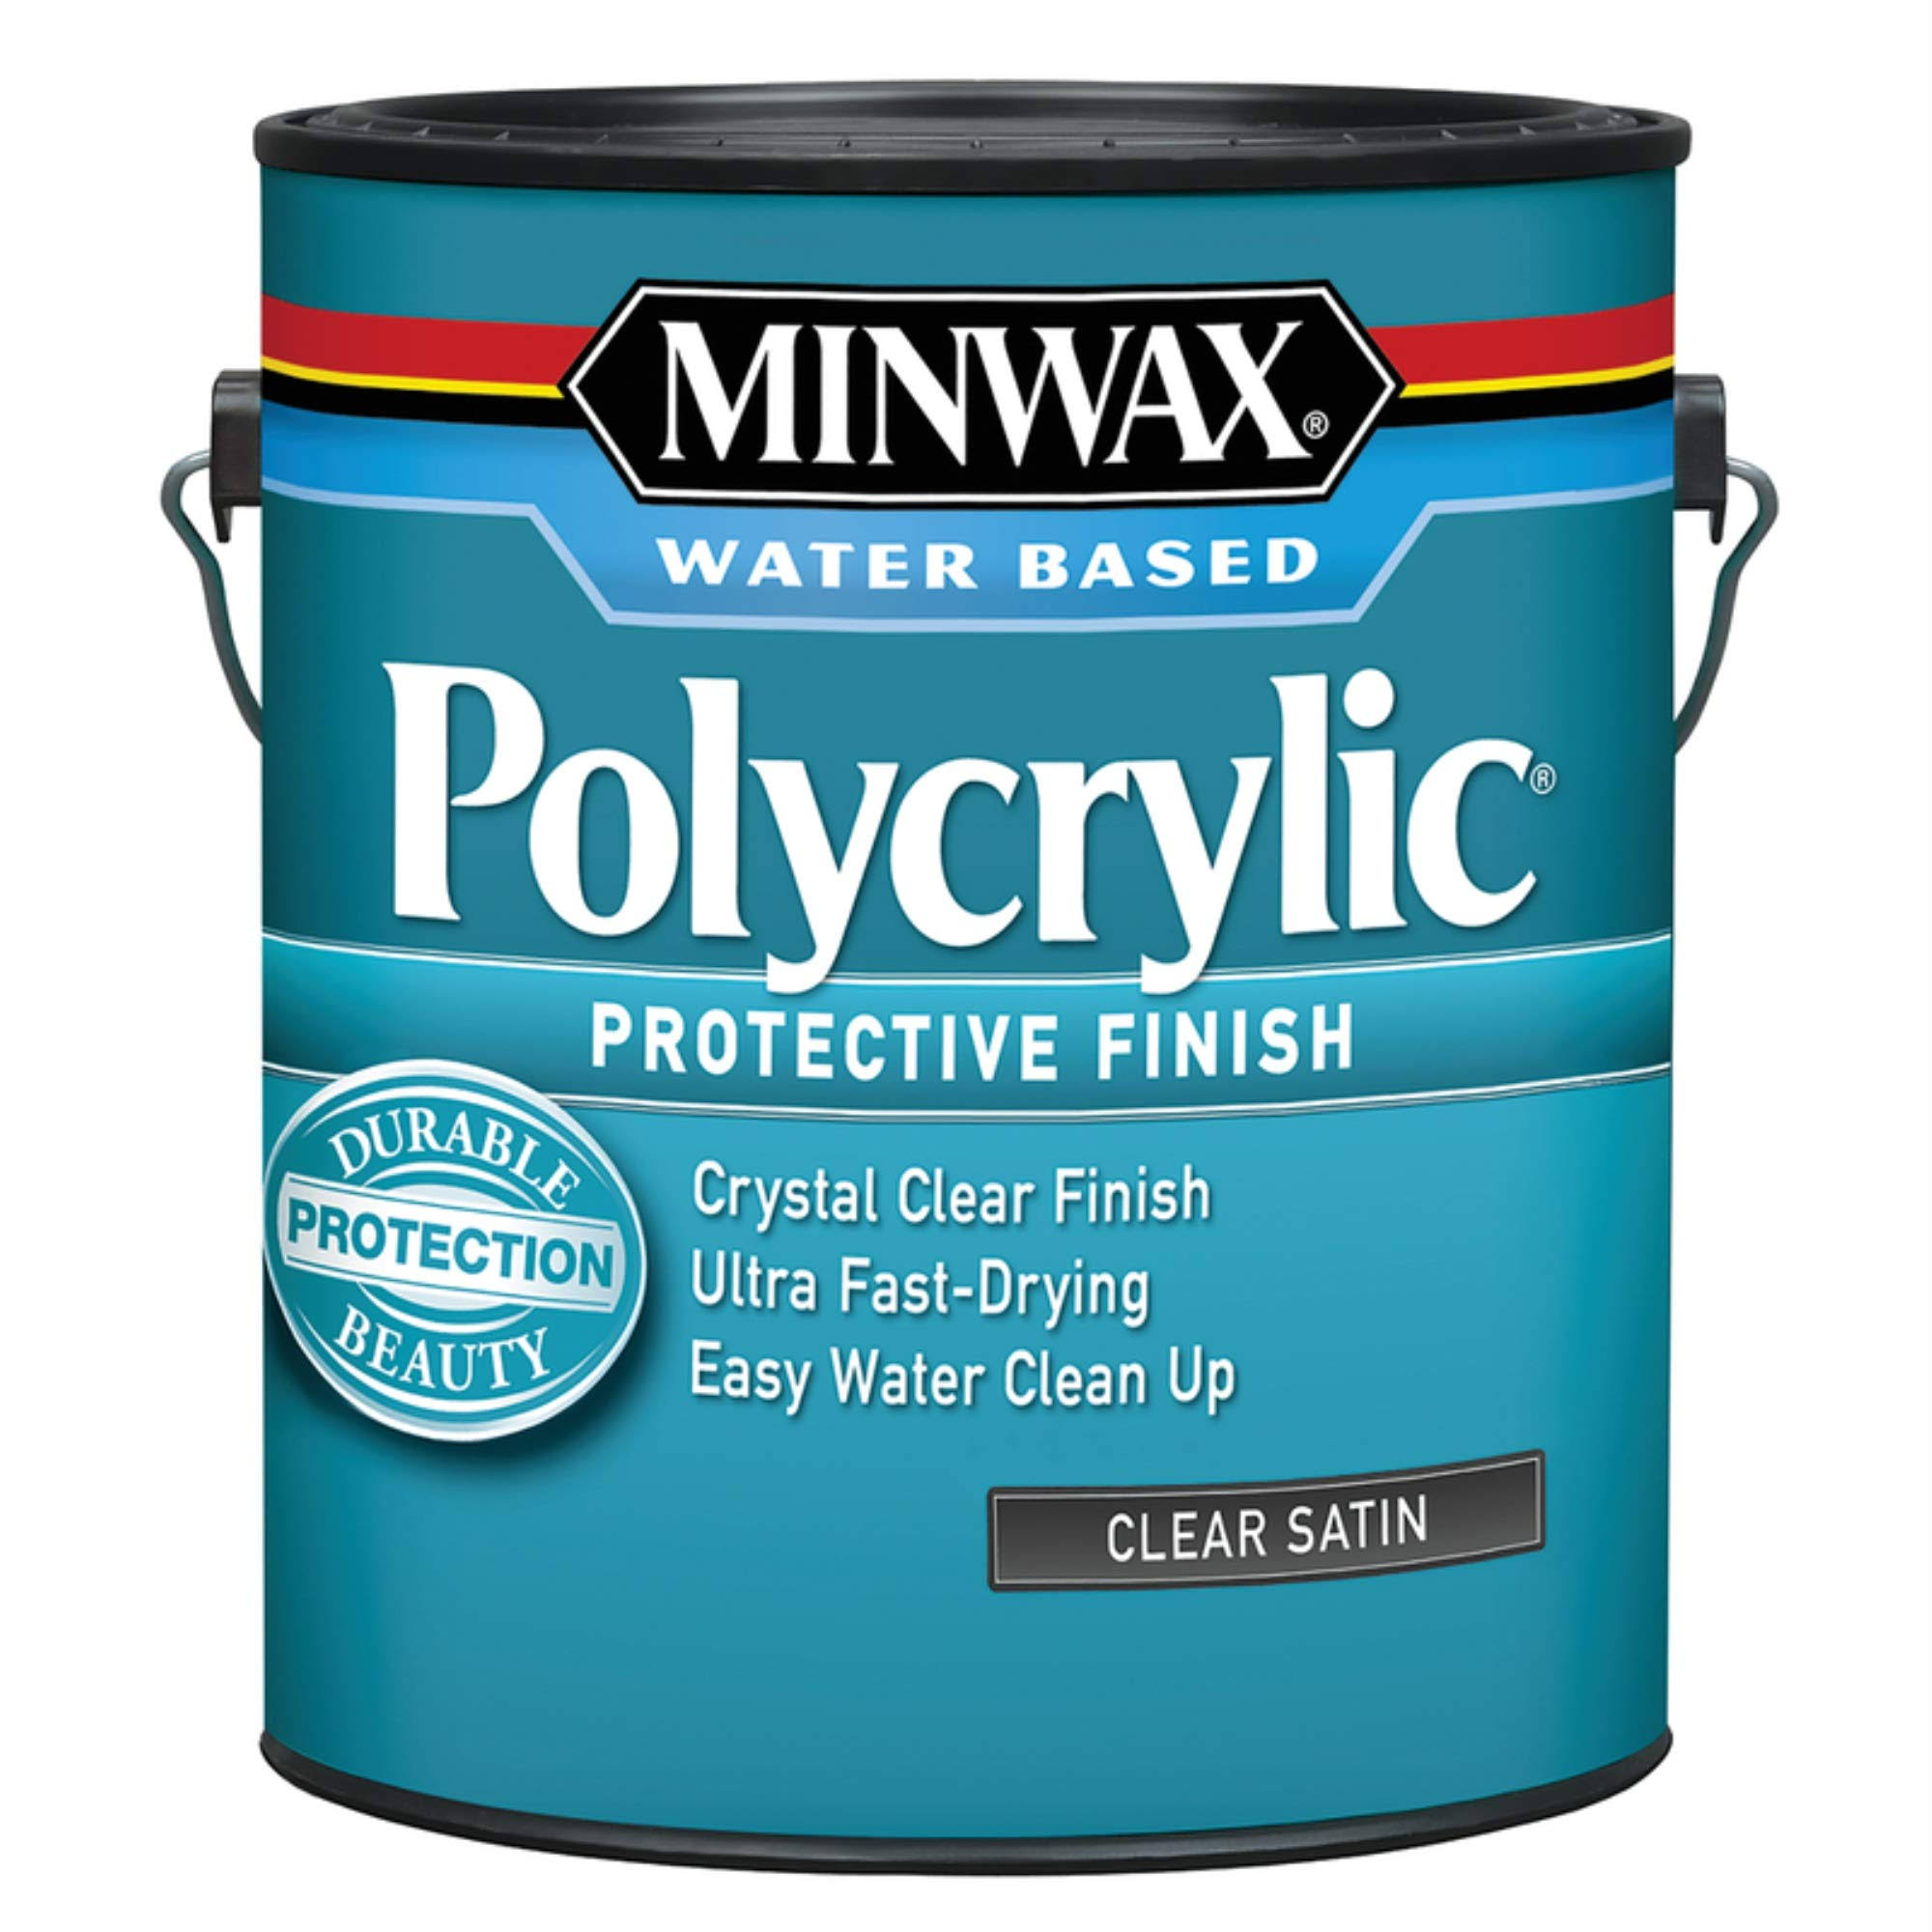 Minwax Polycrylic Water-Based Protective Finish - Clear Satin, 1gal